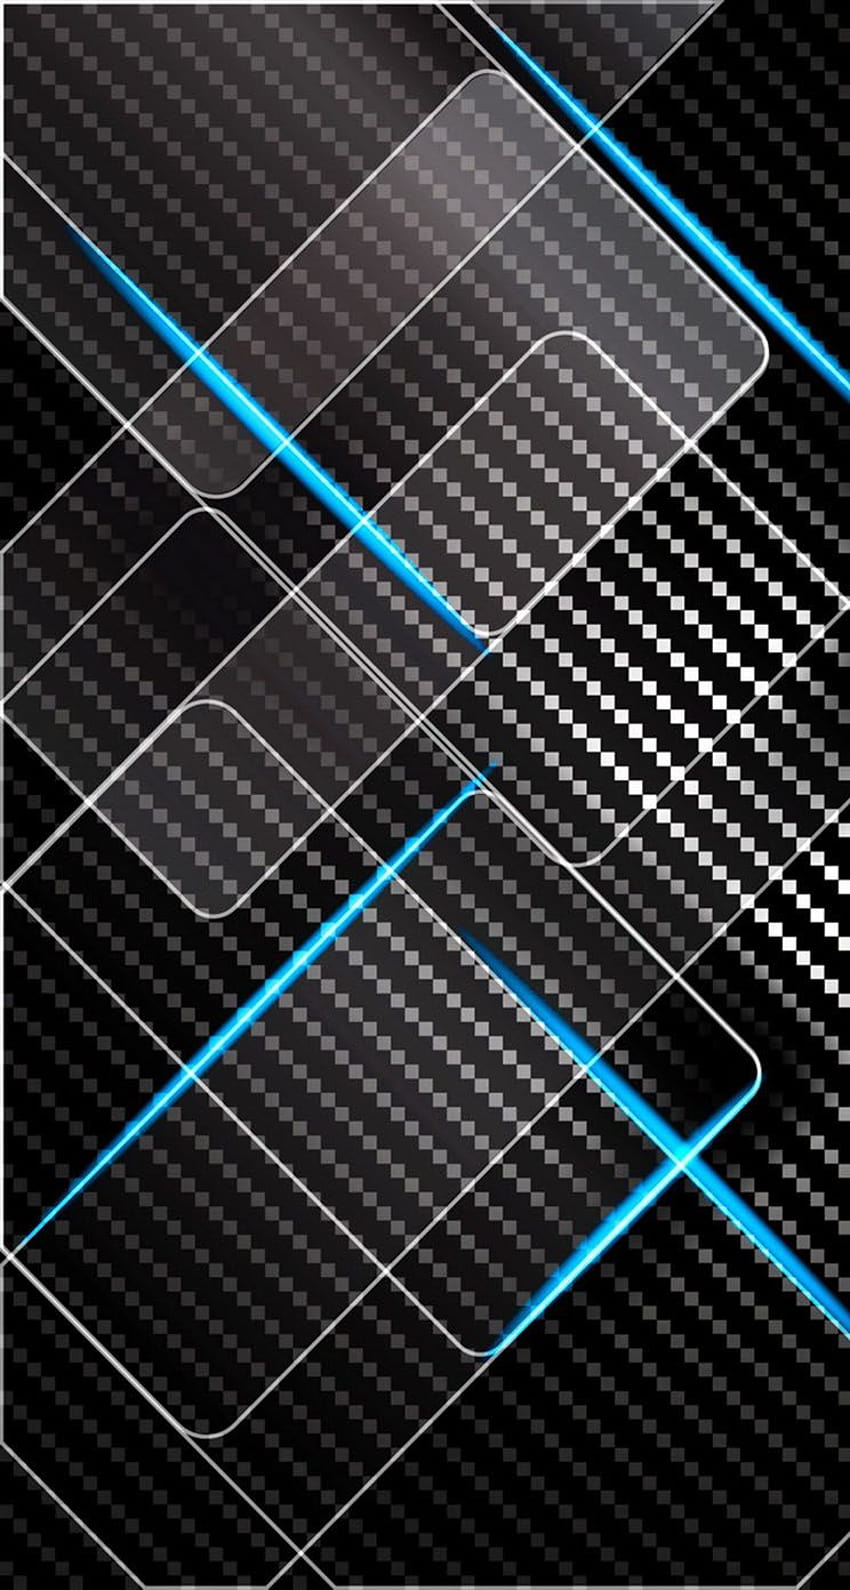 El iPhone » s de textura de carbón metálico oscuro, carbón azul fondo de pantalla del teléfono